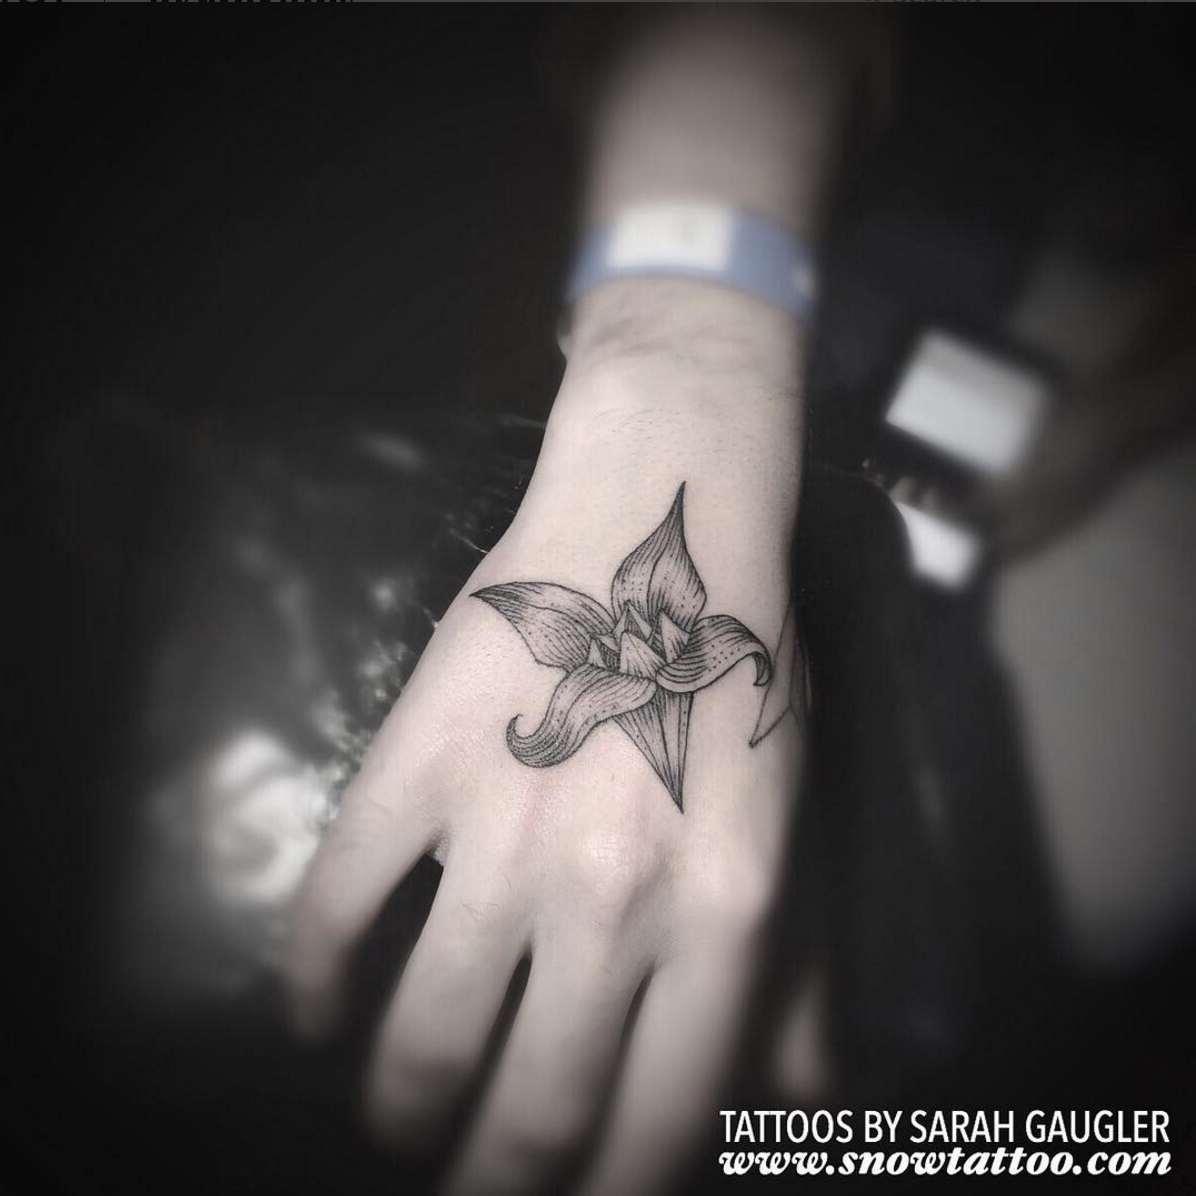 Sarah Gaugler Snow Tattoo Custom Floral Origami New York Best Tattoos Best Tattoo Artist NYC.png